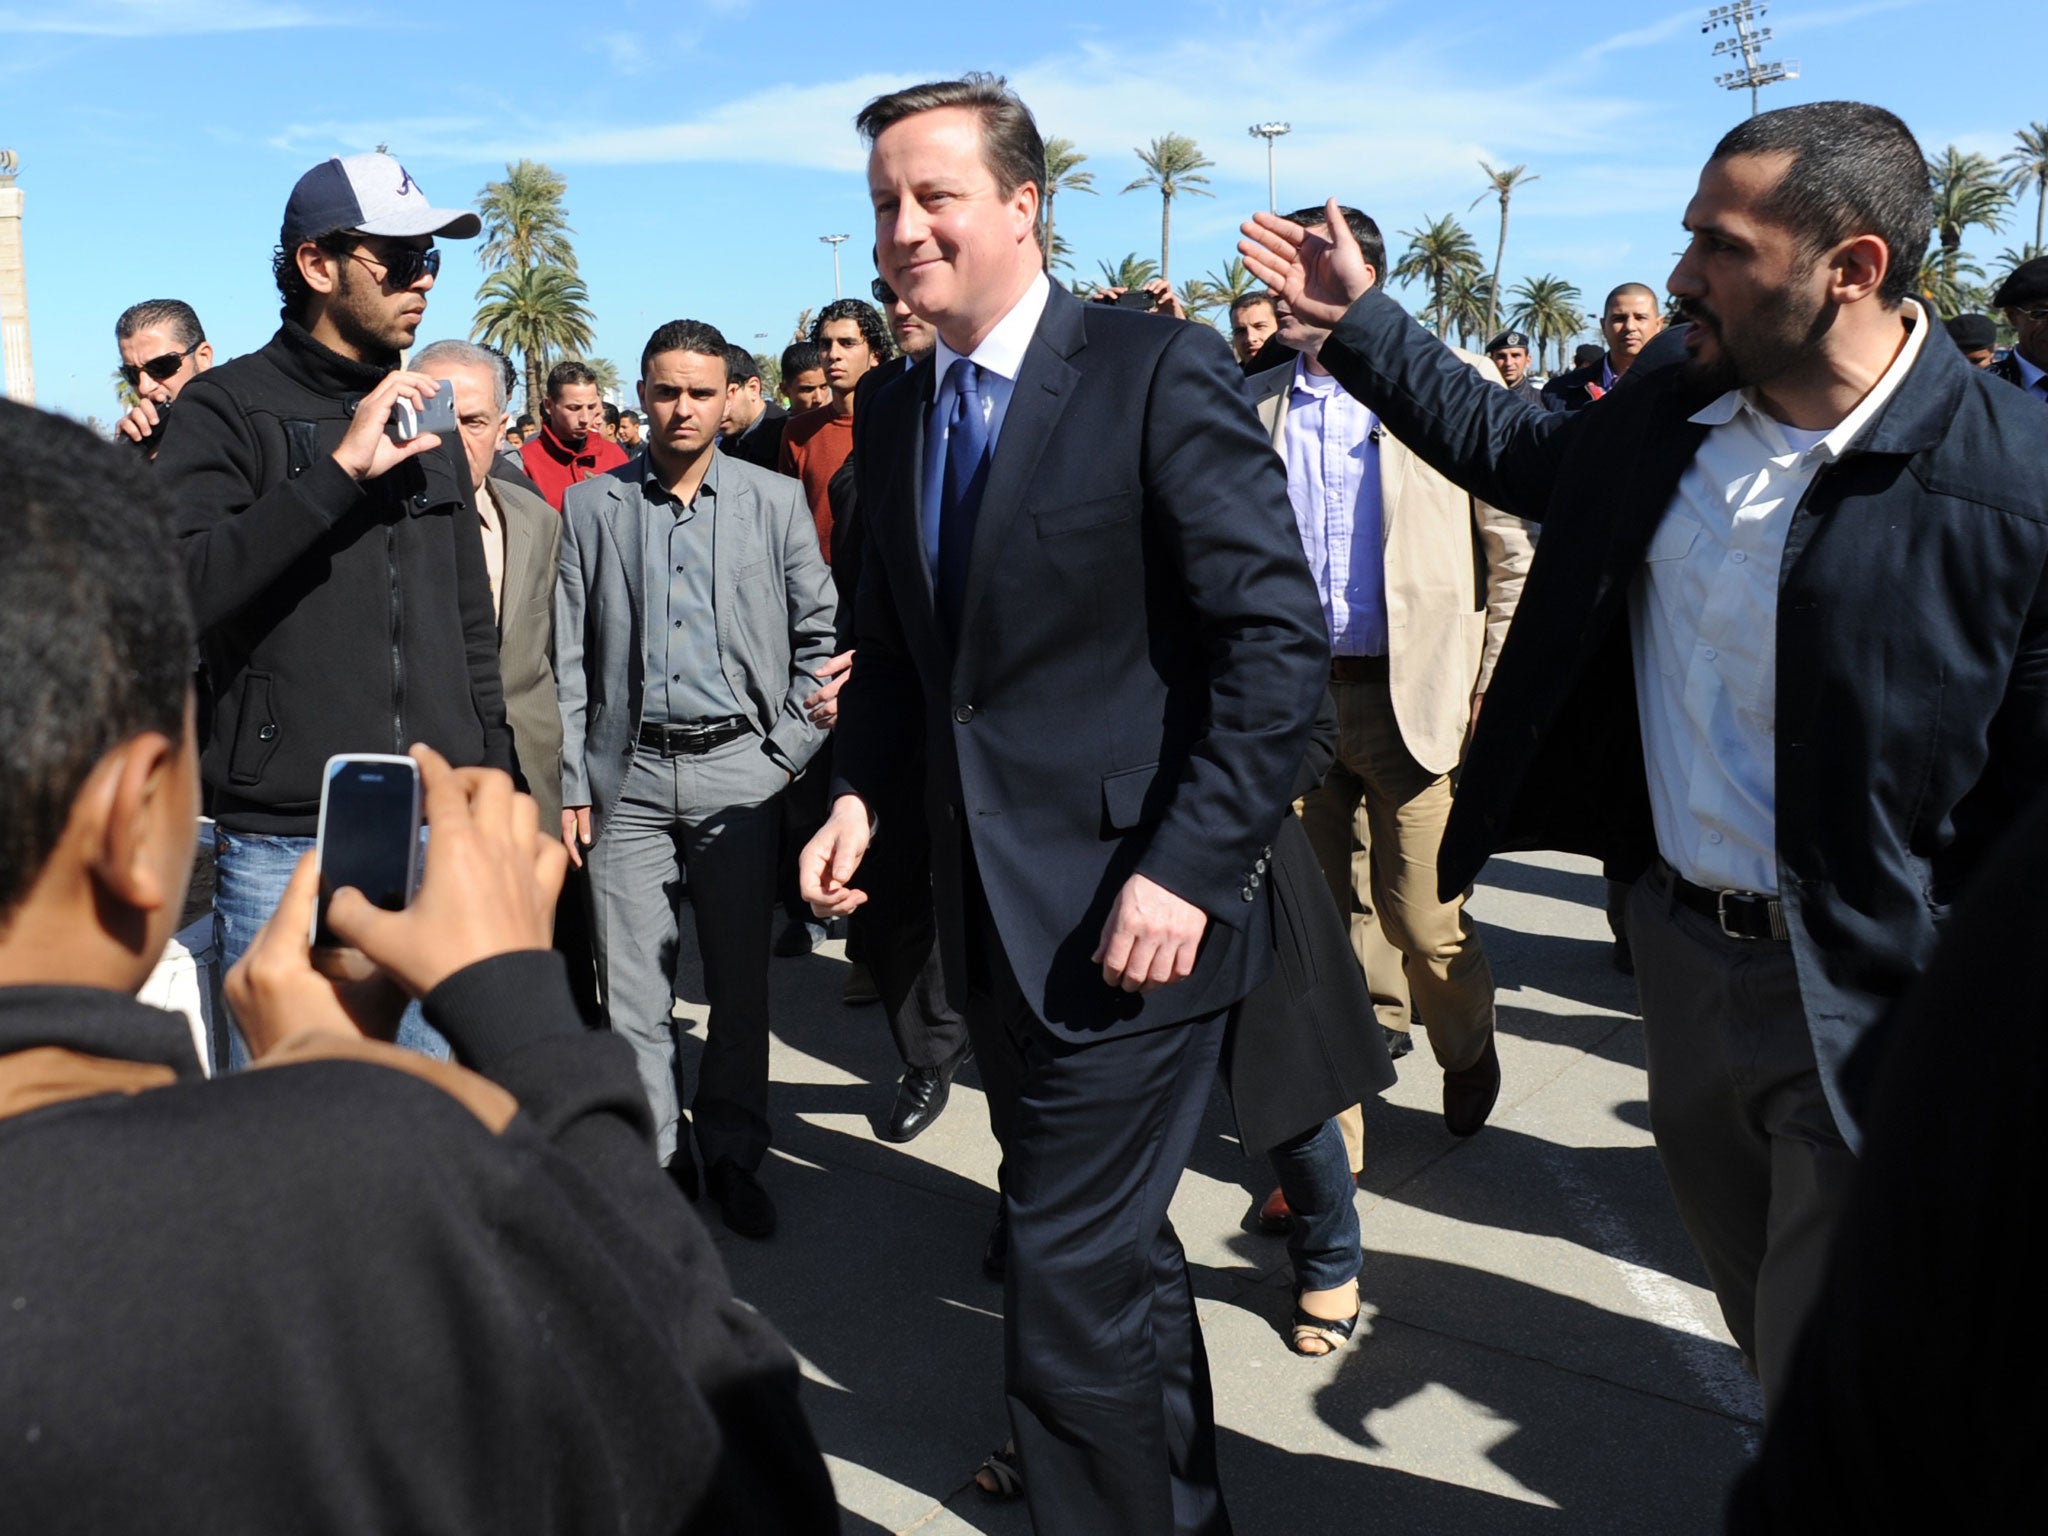 Prime Minister David Cameron takes a walk through Martyrs Square